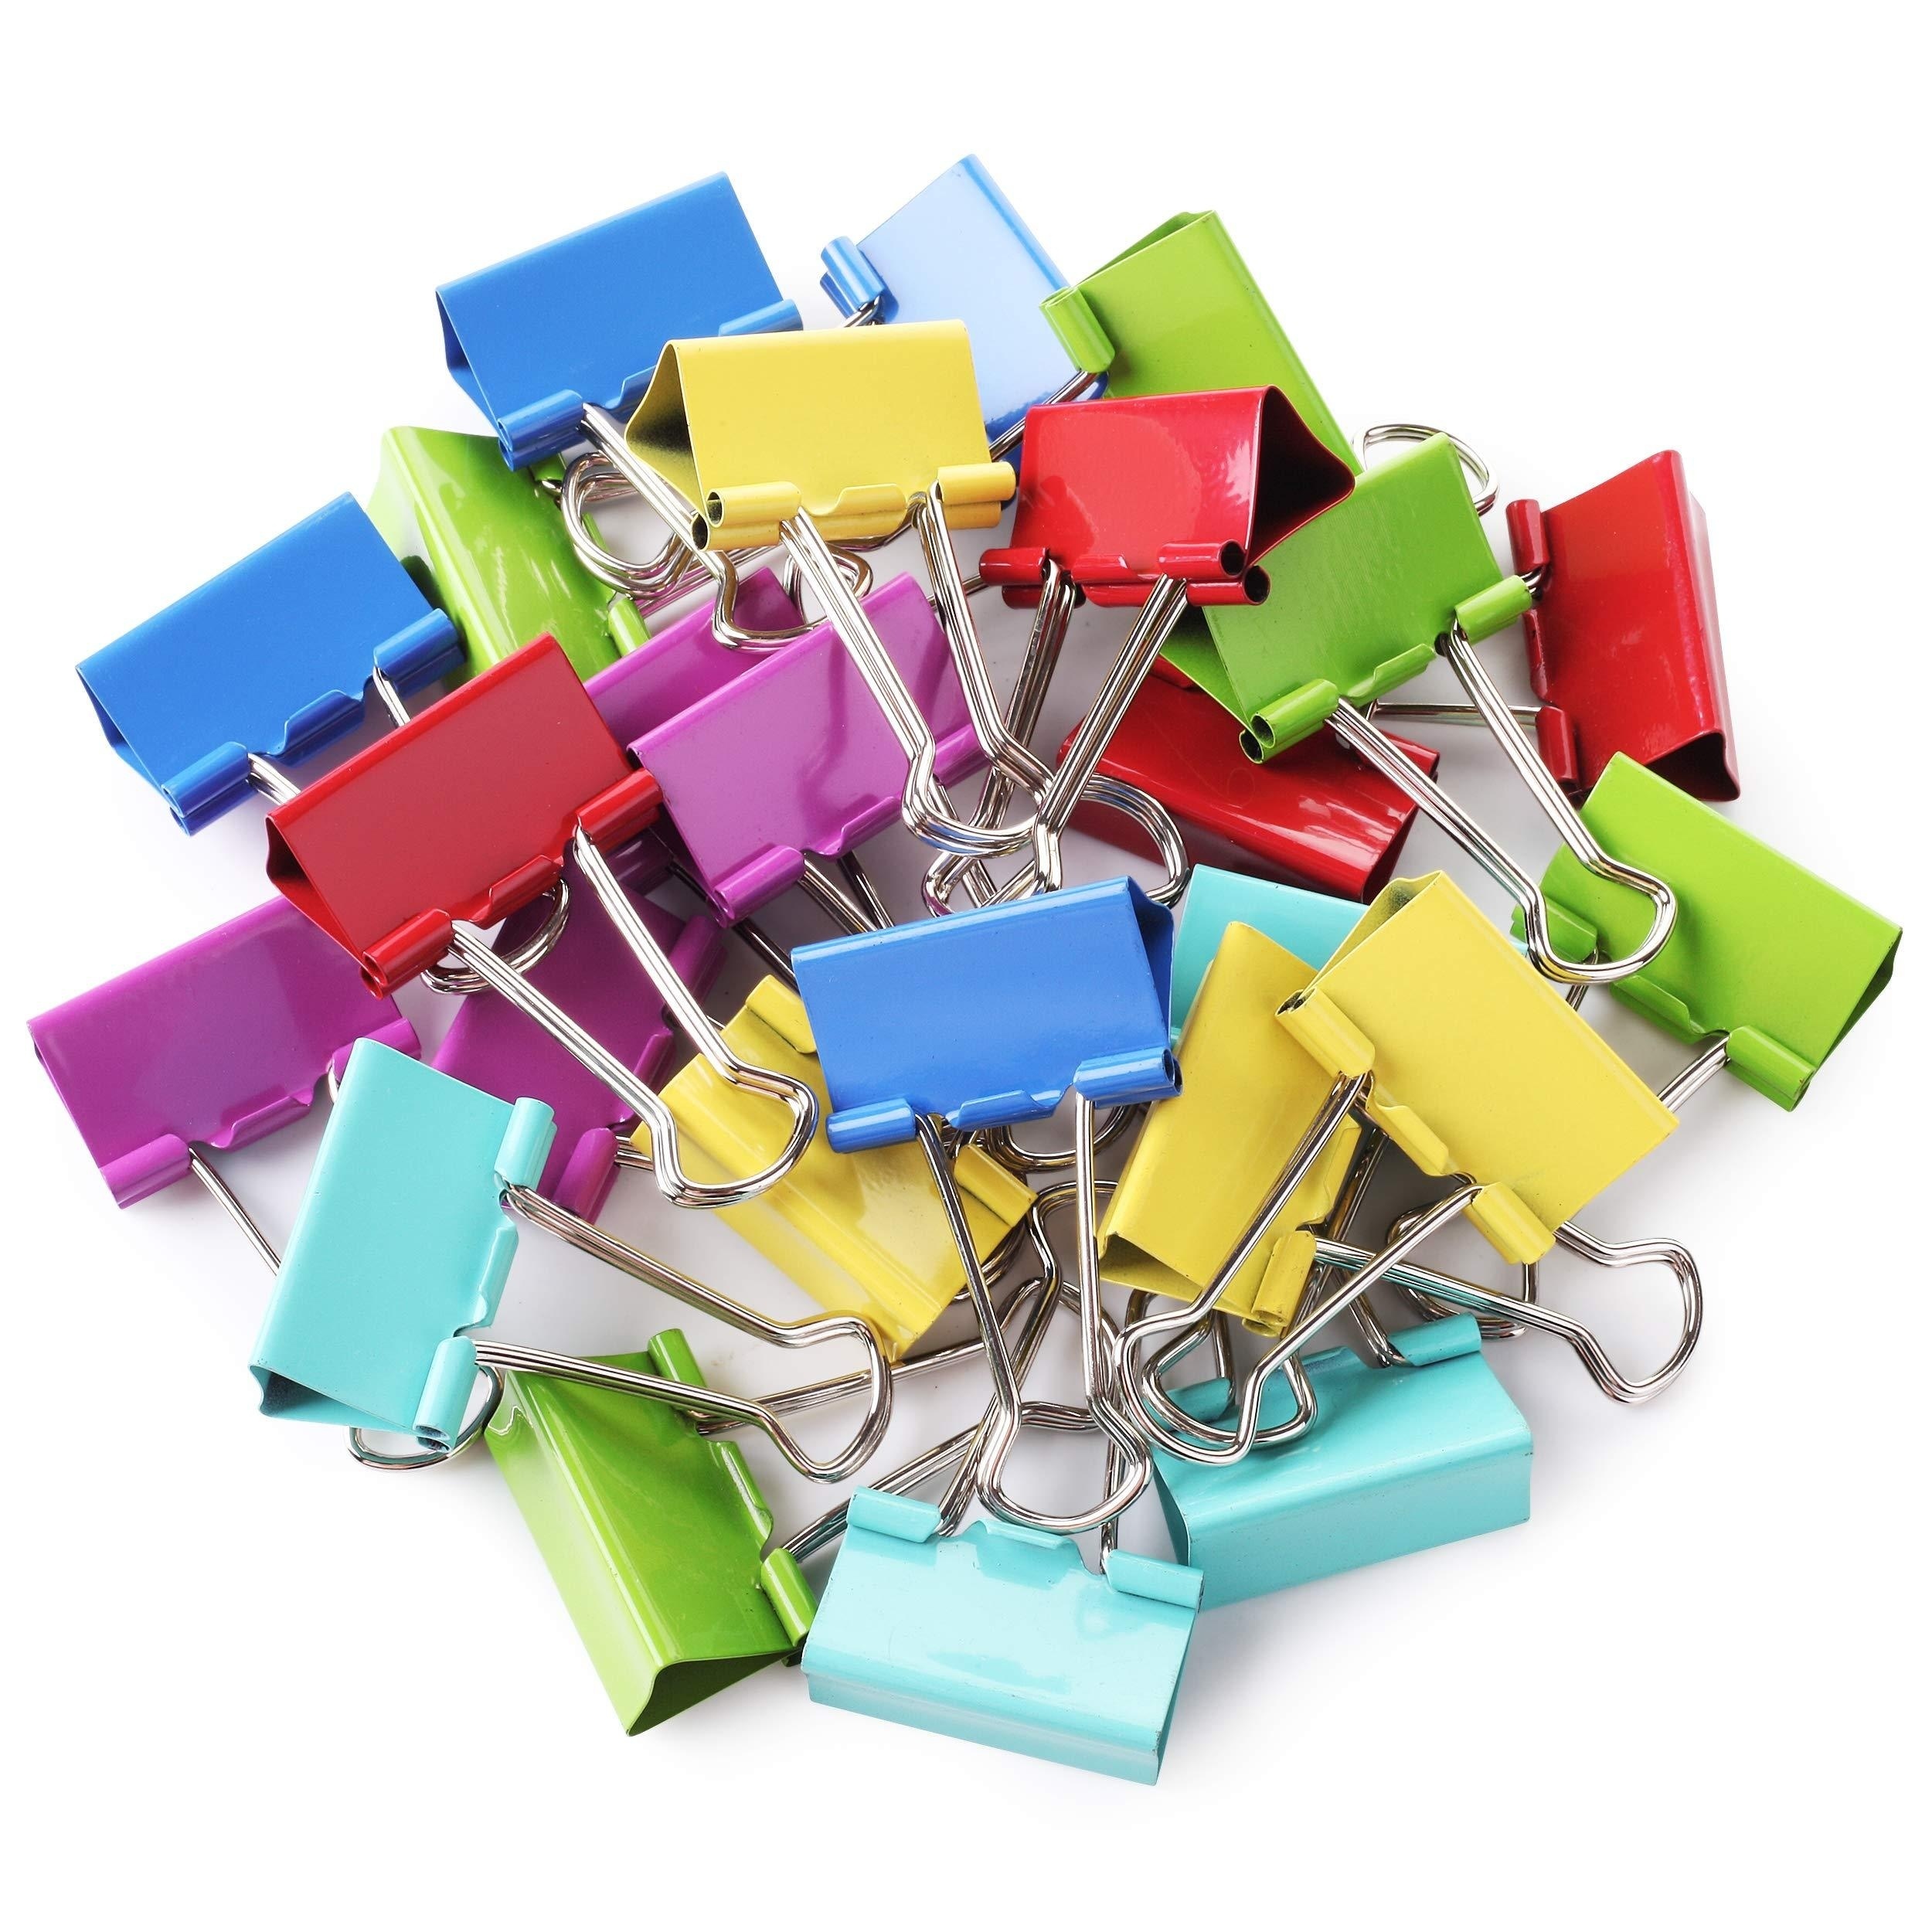 

24pcs Medium-sized Colored Binder Clips, Medium-sized, Colored Binder Clips, Clips, Paper Clips, Binder Clips, Paper Clamps, Office Clamps